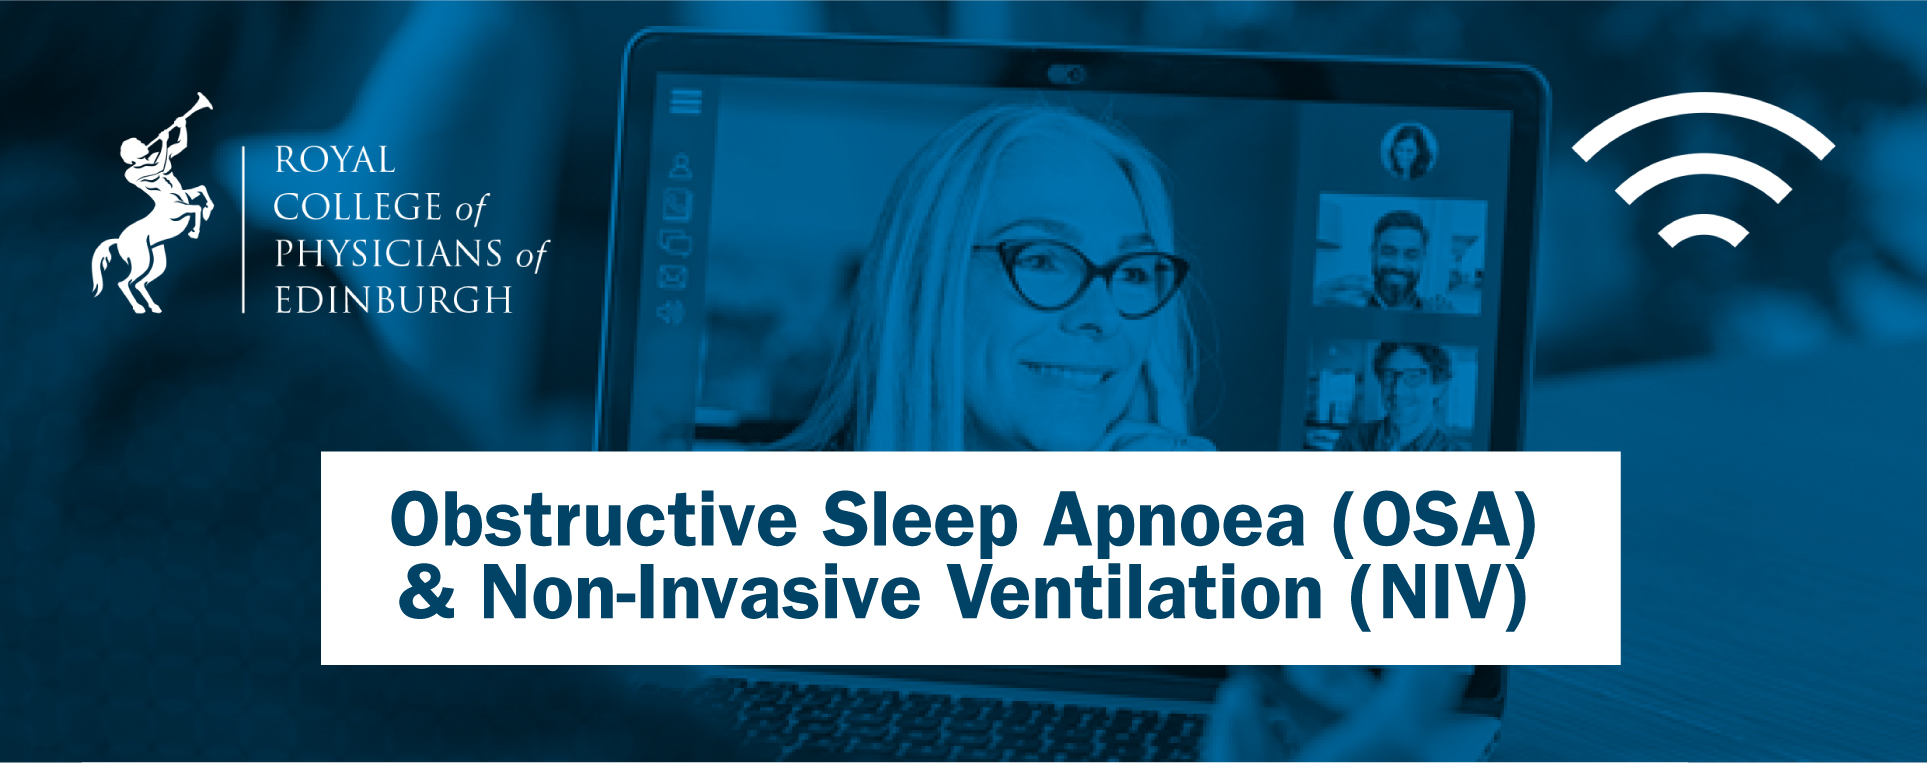 Obstructive Sleep Apnoea (OSA) & Non-Invasive Ventilation (NIV)